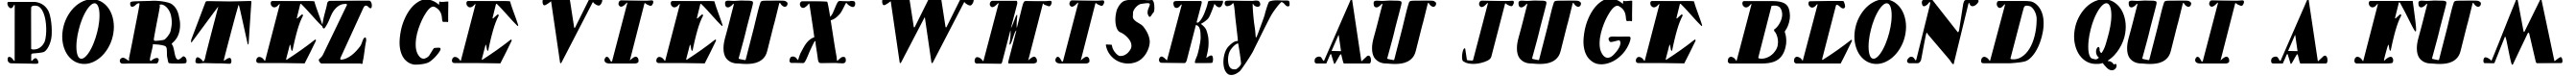 Пример написания шрифтом 1920Cnd TYGRA текста на французском